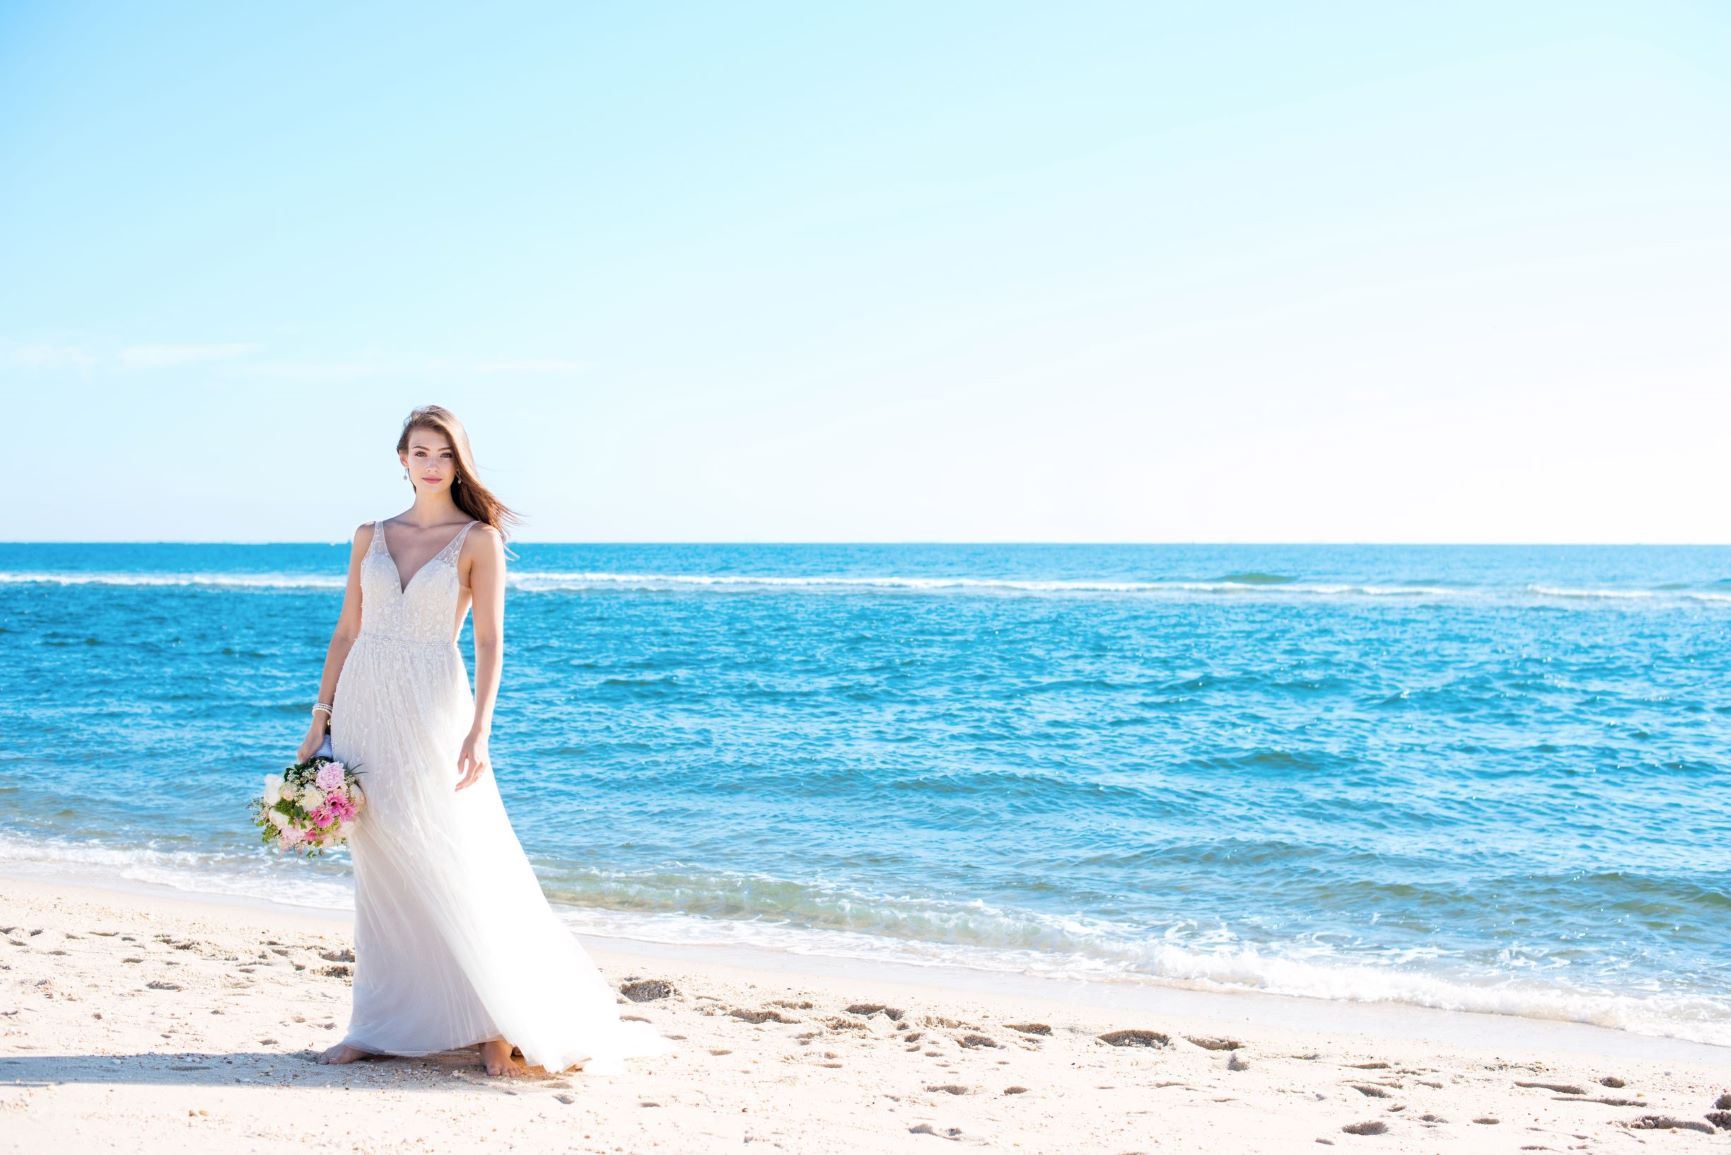 Brunette model on beach holding flowers and wearing wedding dress